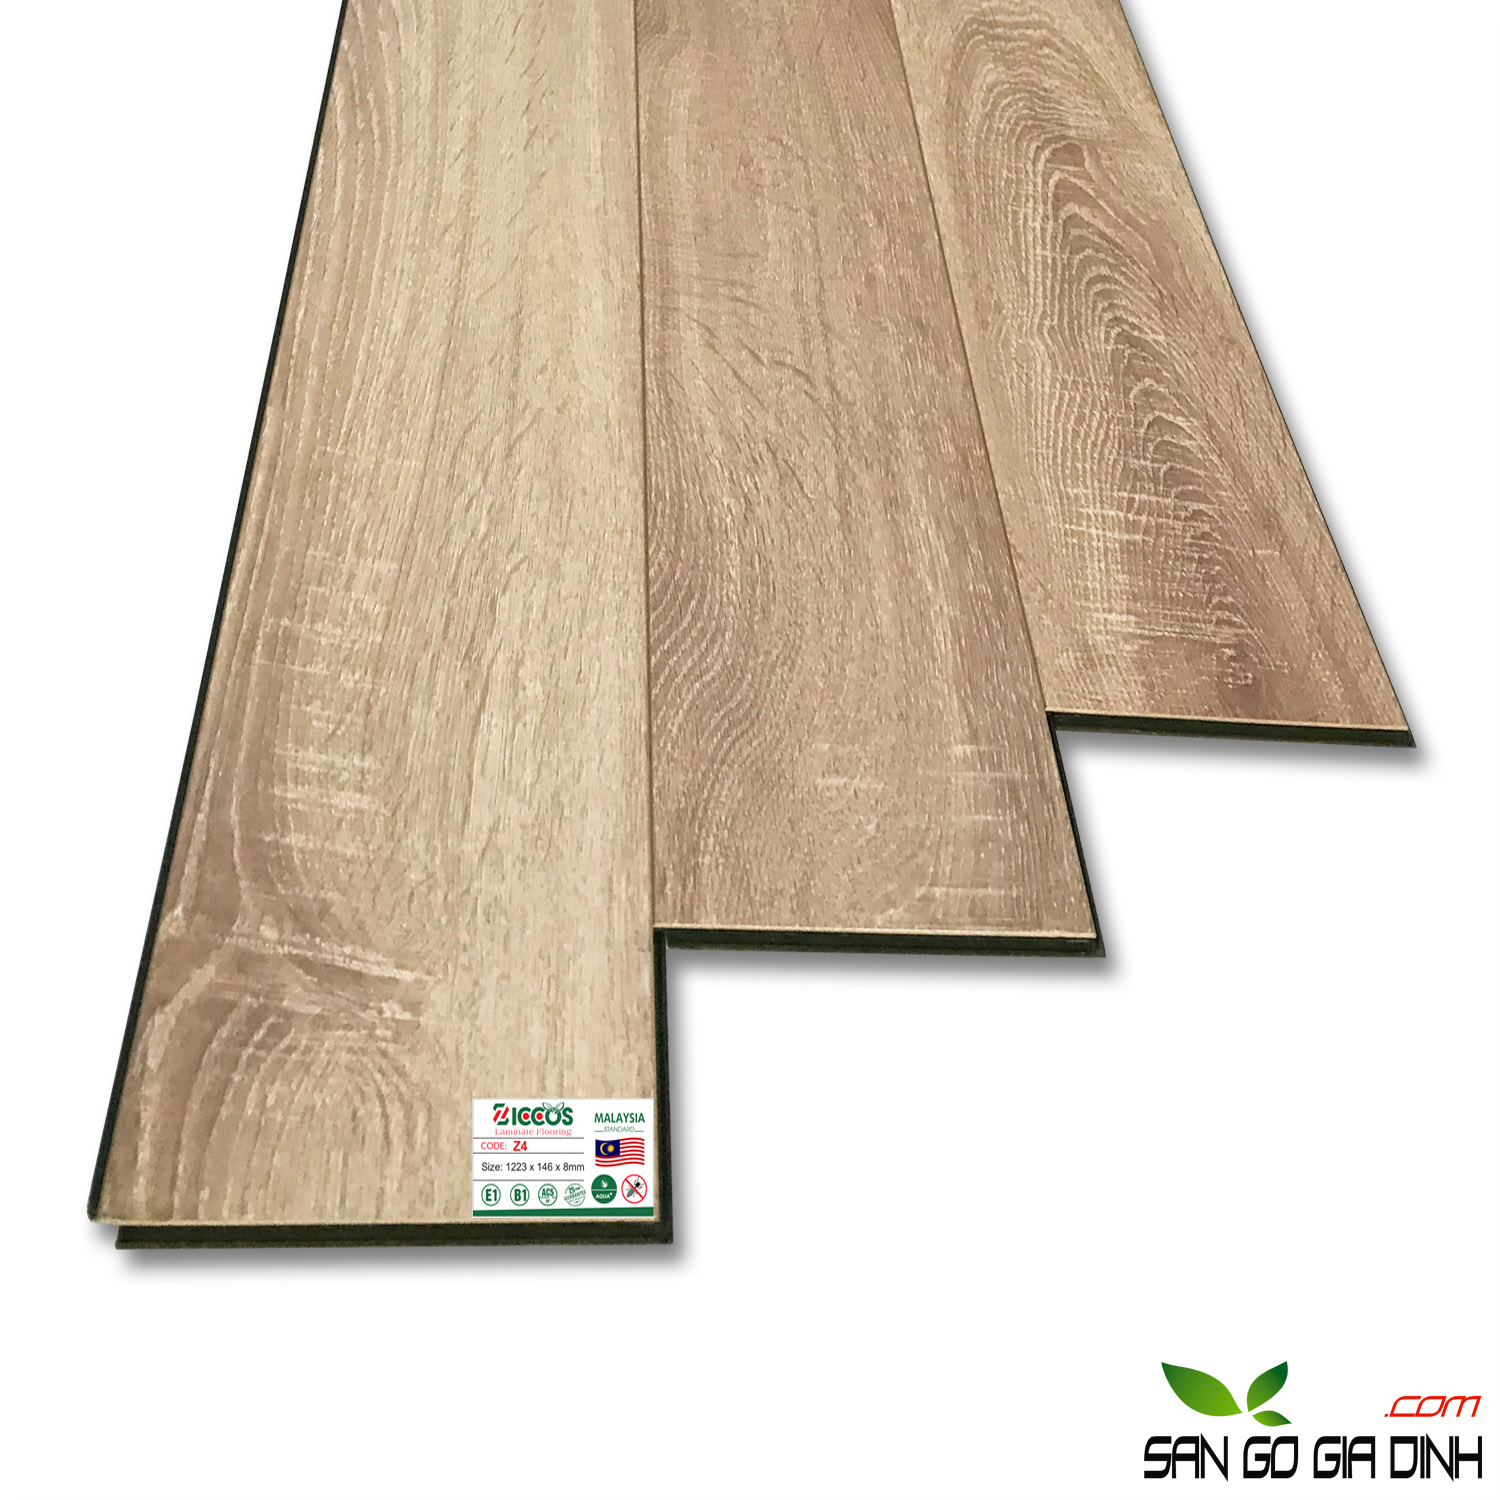 Sàn gỗ cốt xanh Ziccos Z4